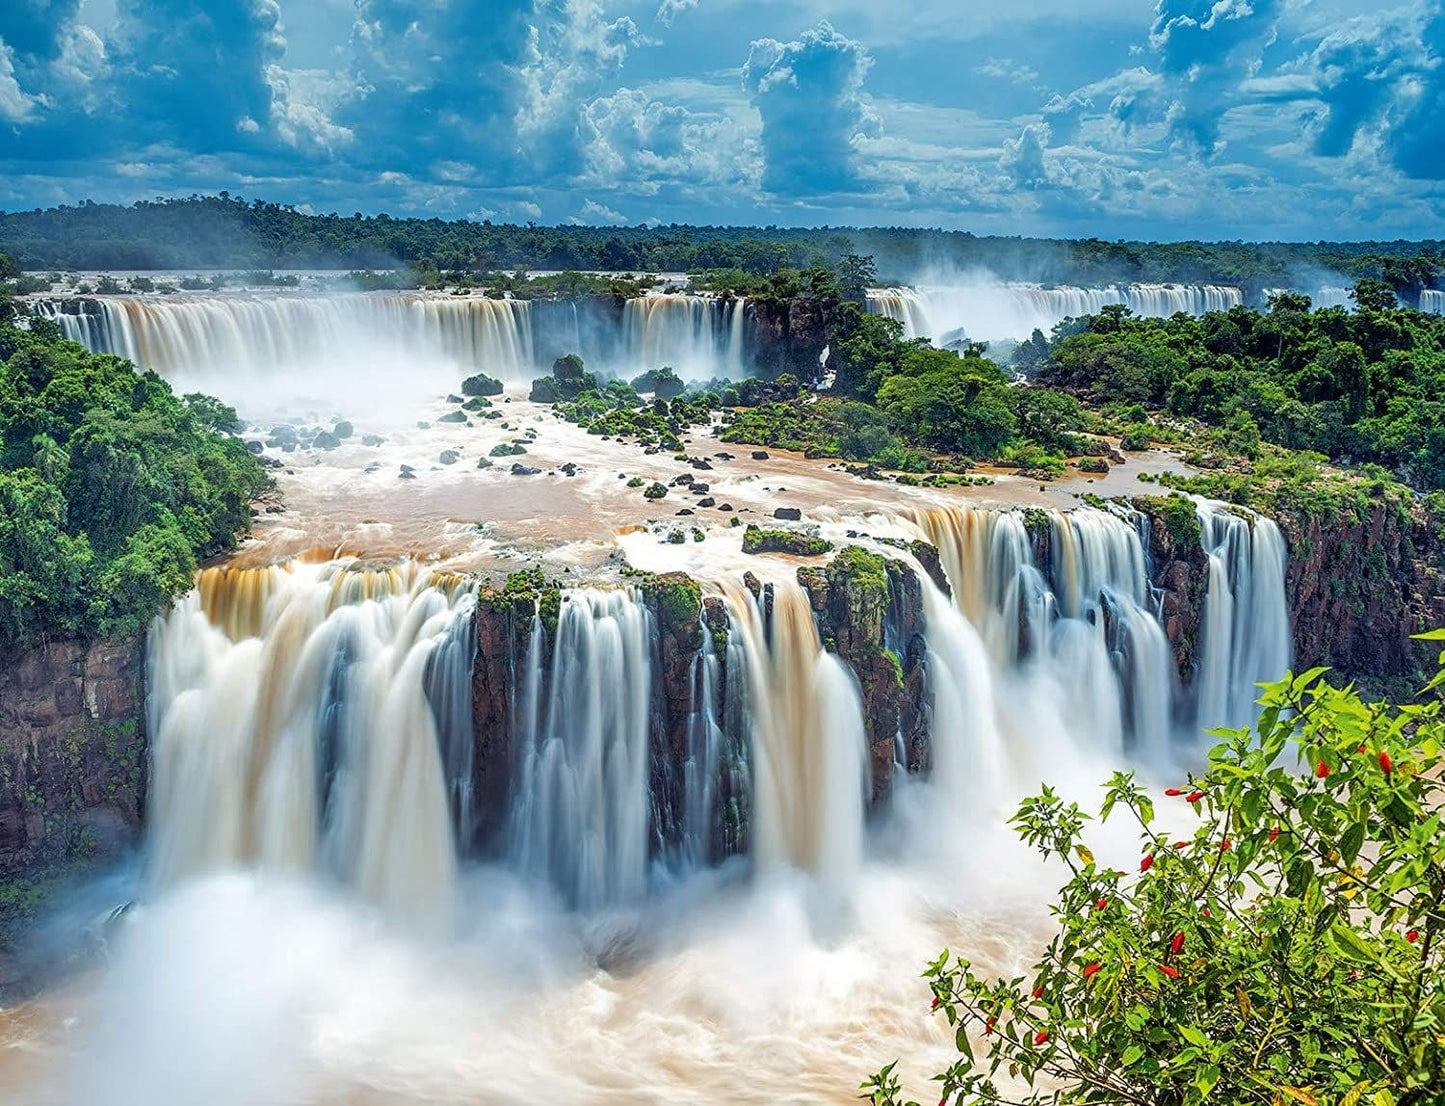 Ravensburger - Iguazu Waterfalls - Brazil - 2000 Piece Jigsaw Puzzle